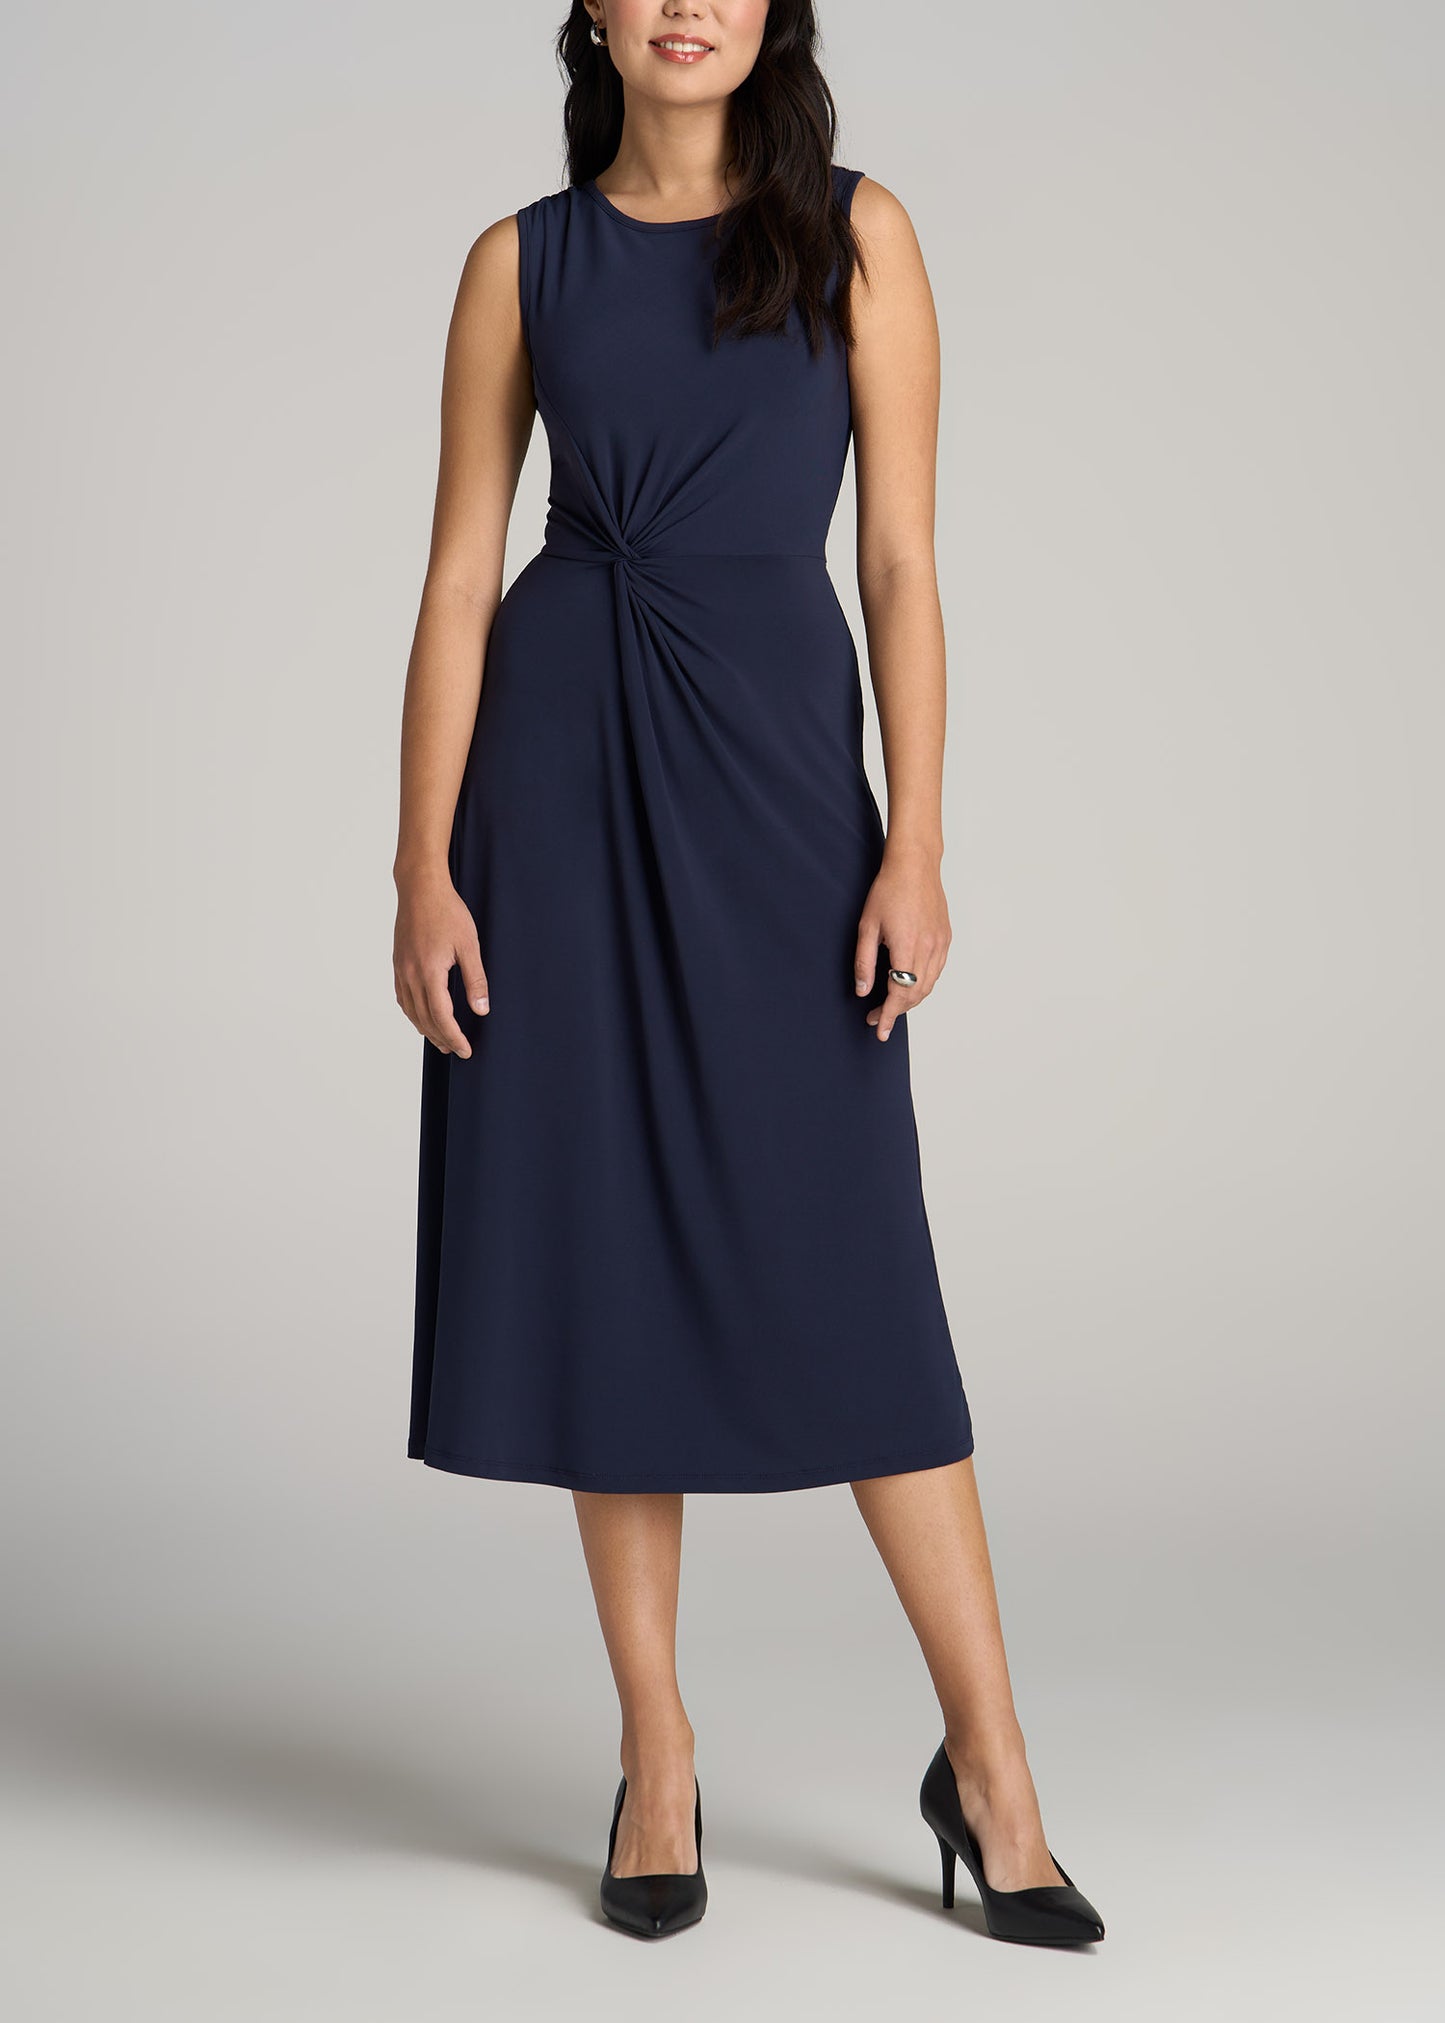 Sleeveless Knot Front Dress for Tall Women | American Tall